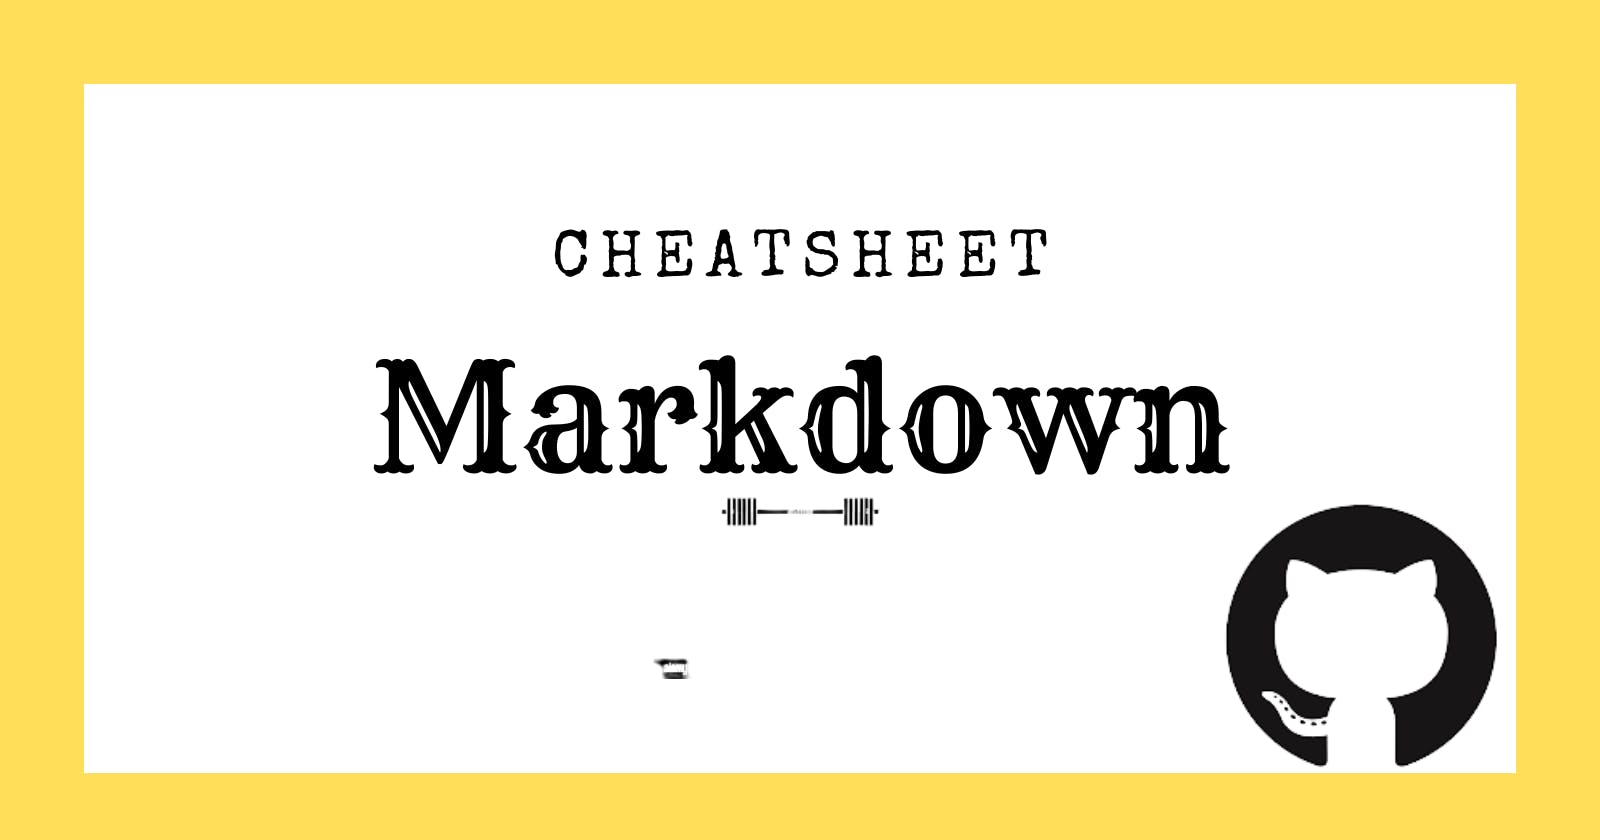 Cheatsheet for Markdown